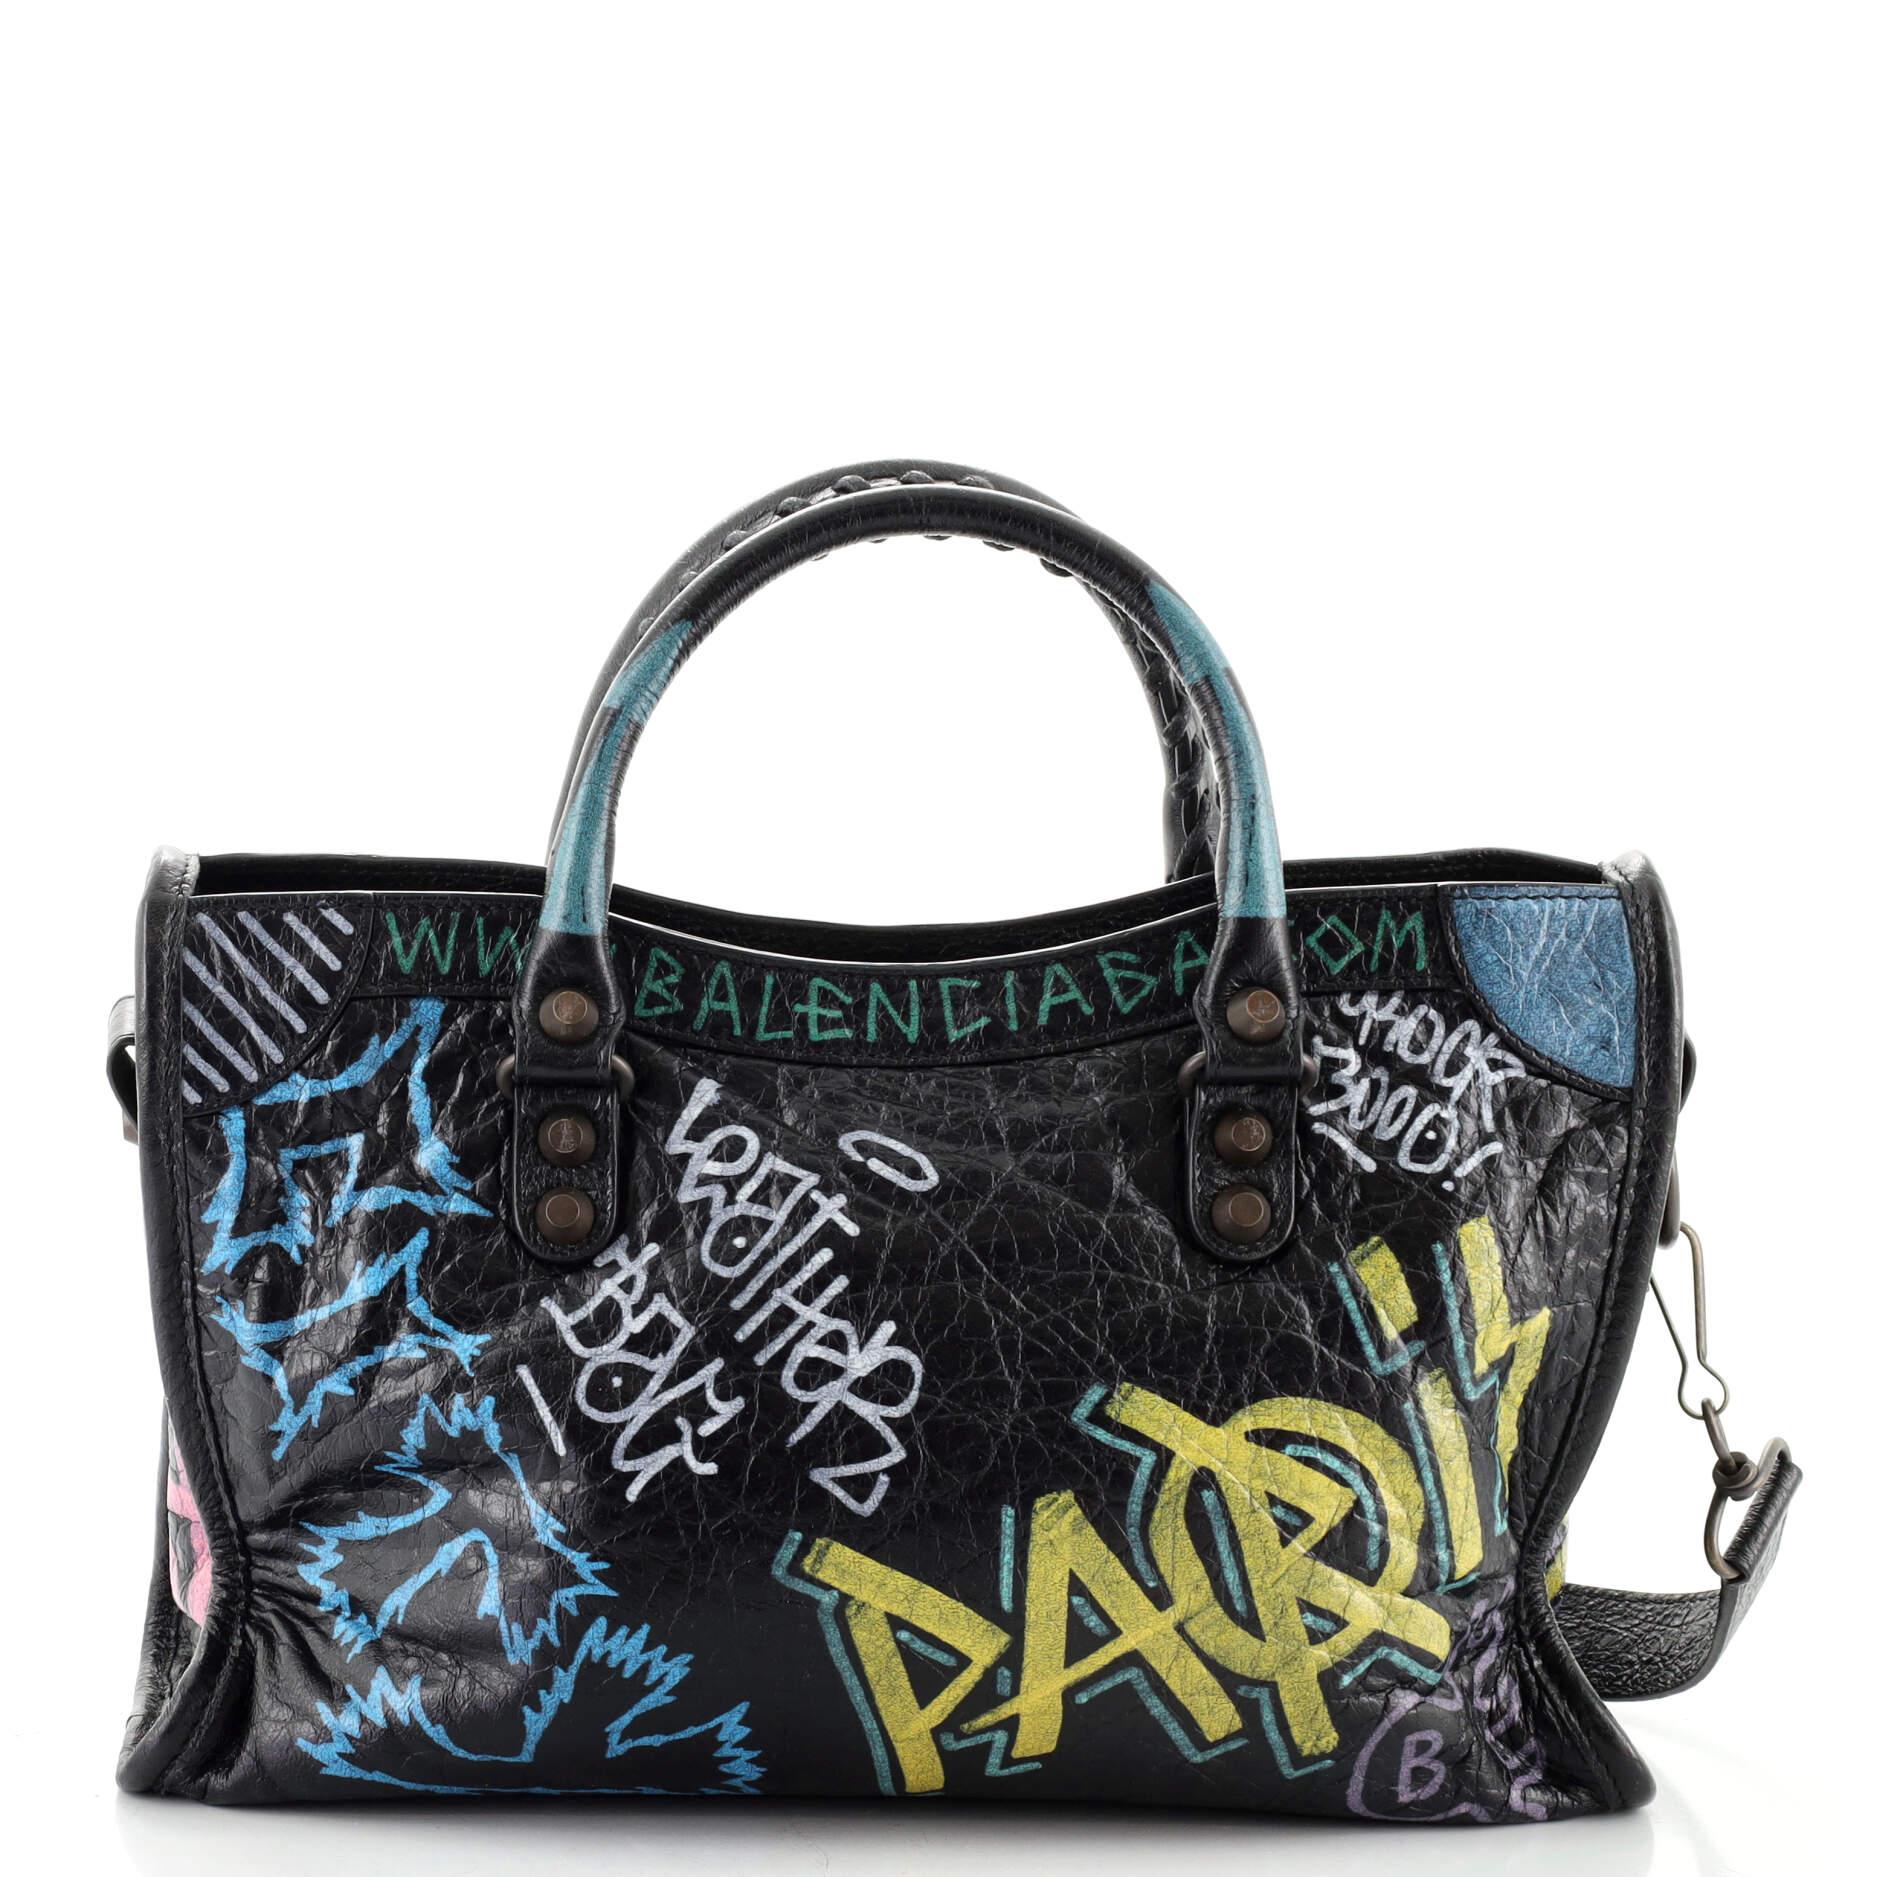 graffiti handbag